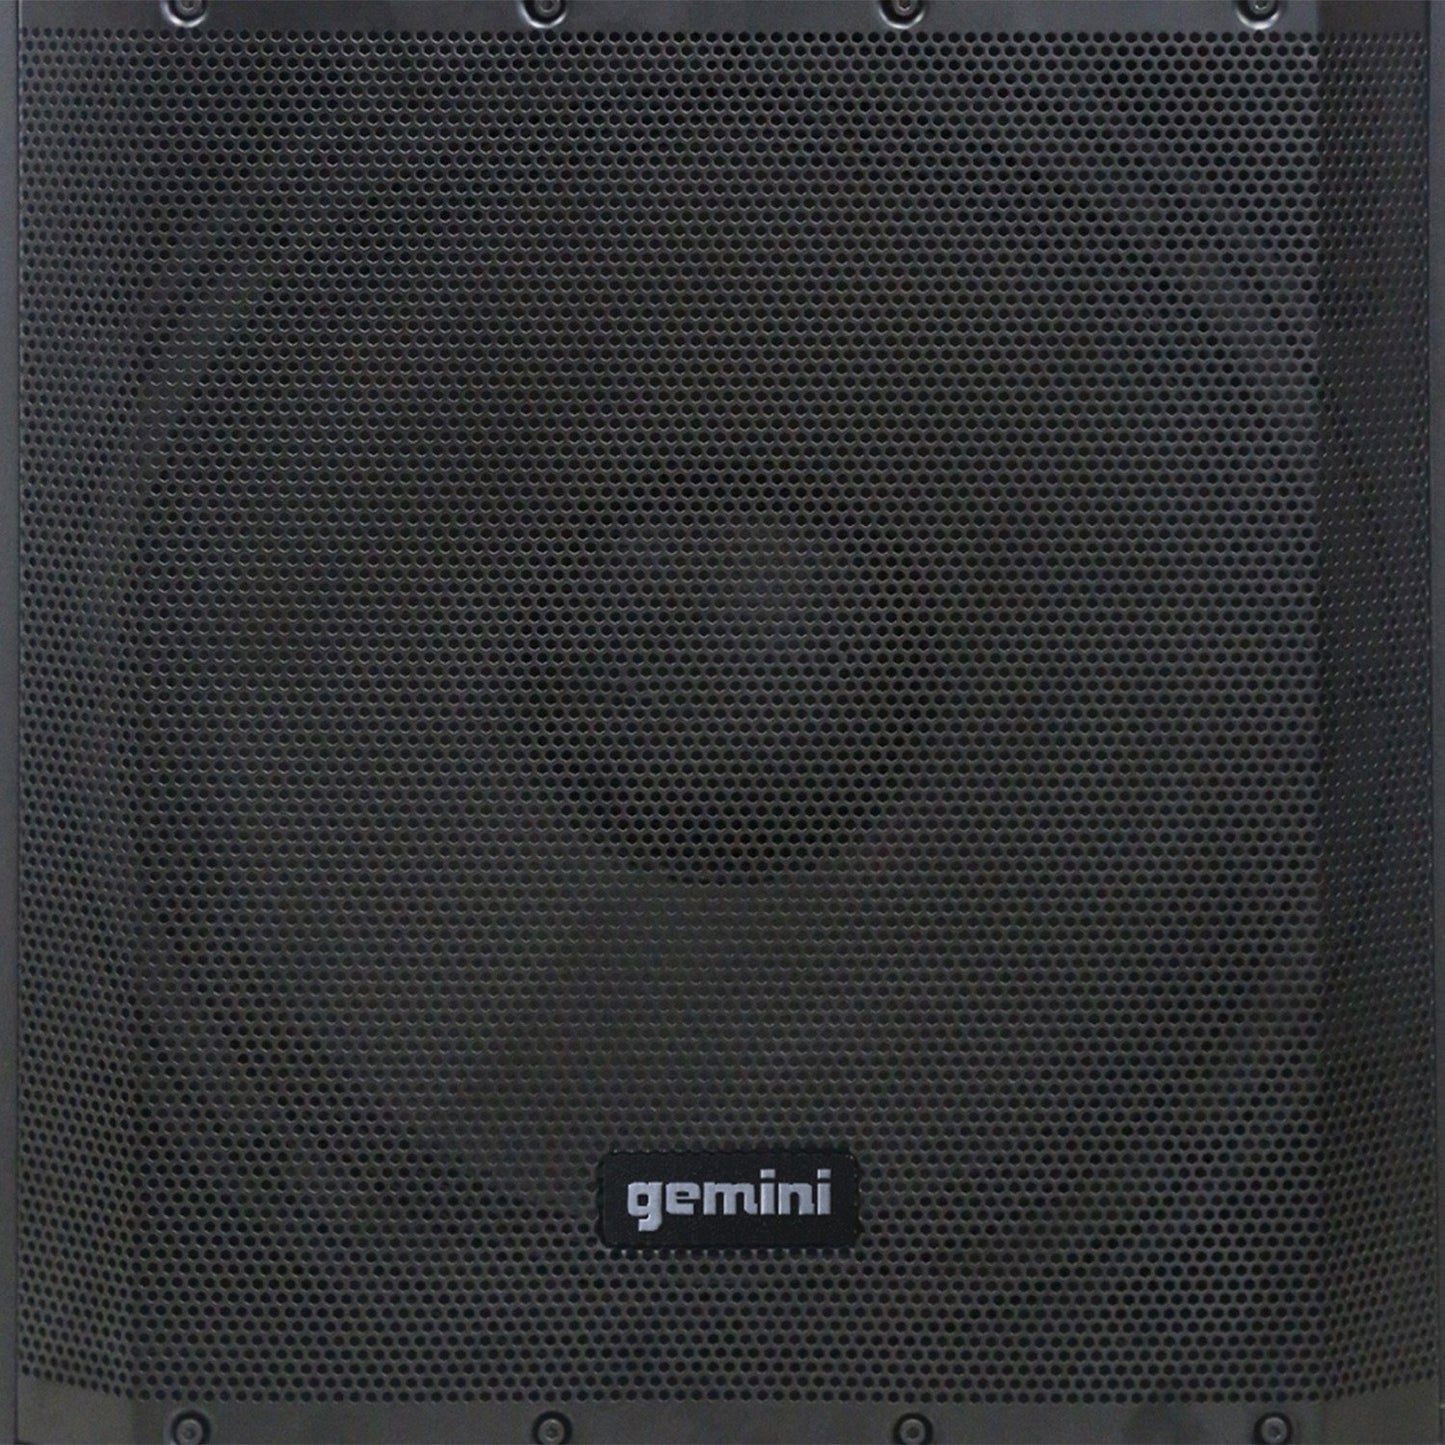 Gemini GSP-2200 Ultra Powerful BT 2200 Peak Watt Speaker w/Built-In Media Player